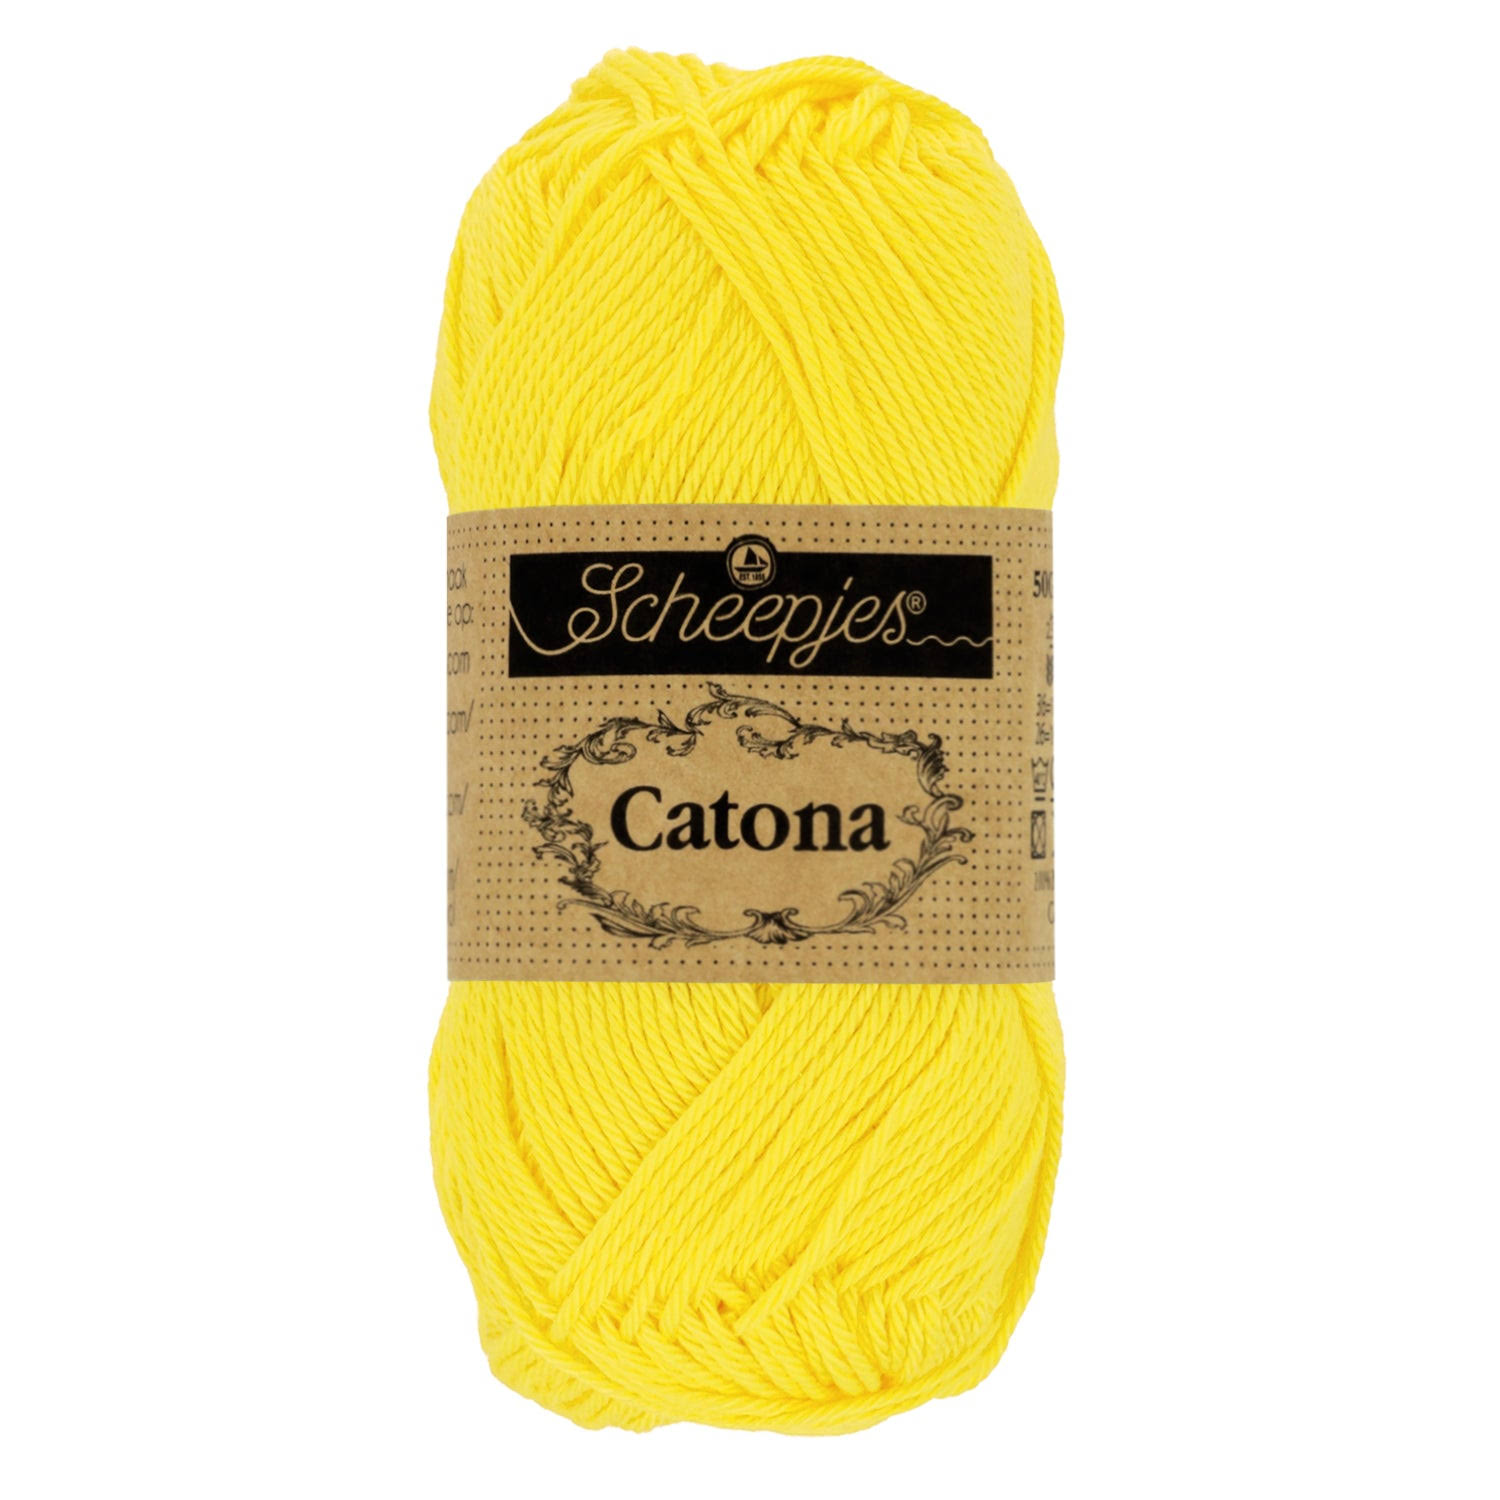 Scheepjes Catona - Lemon (280)